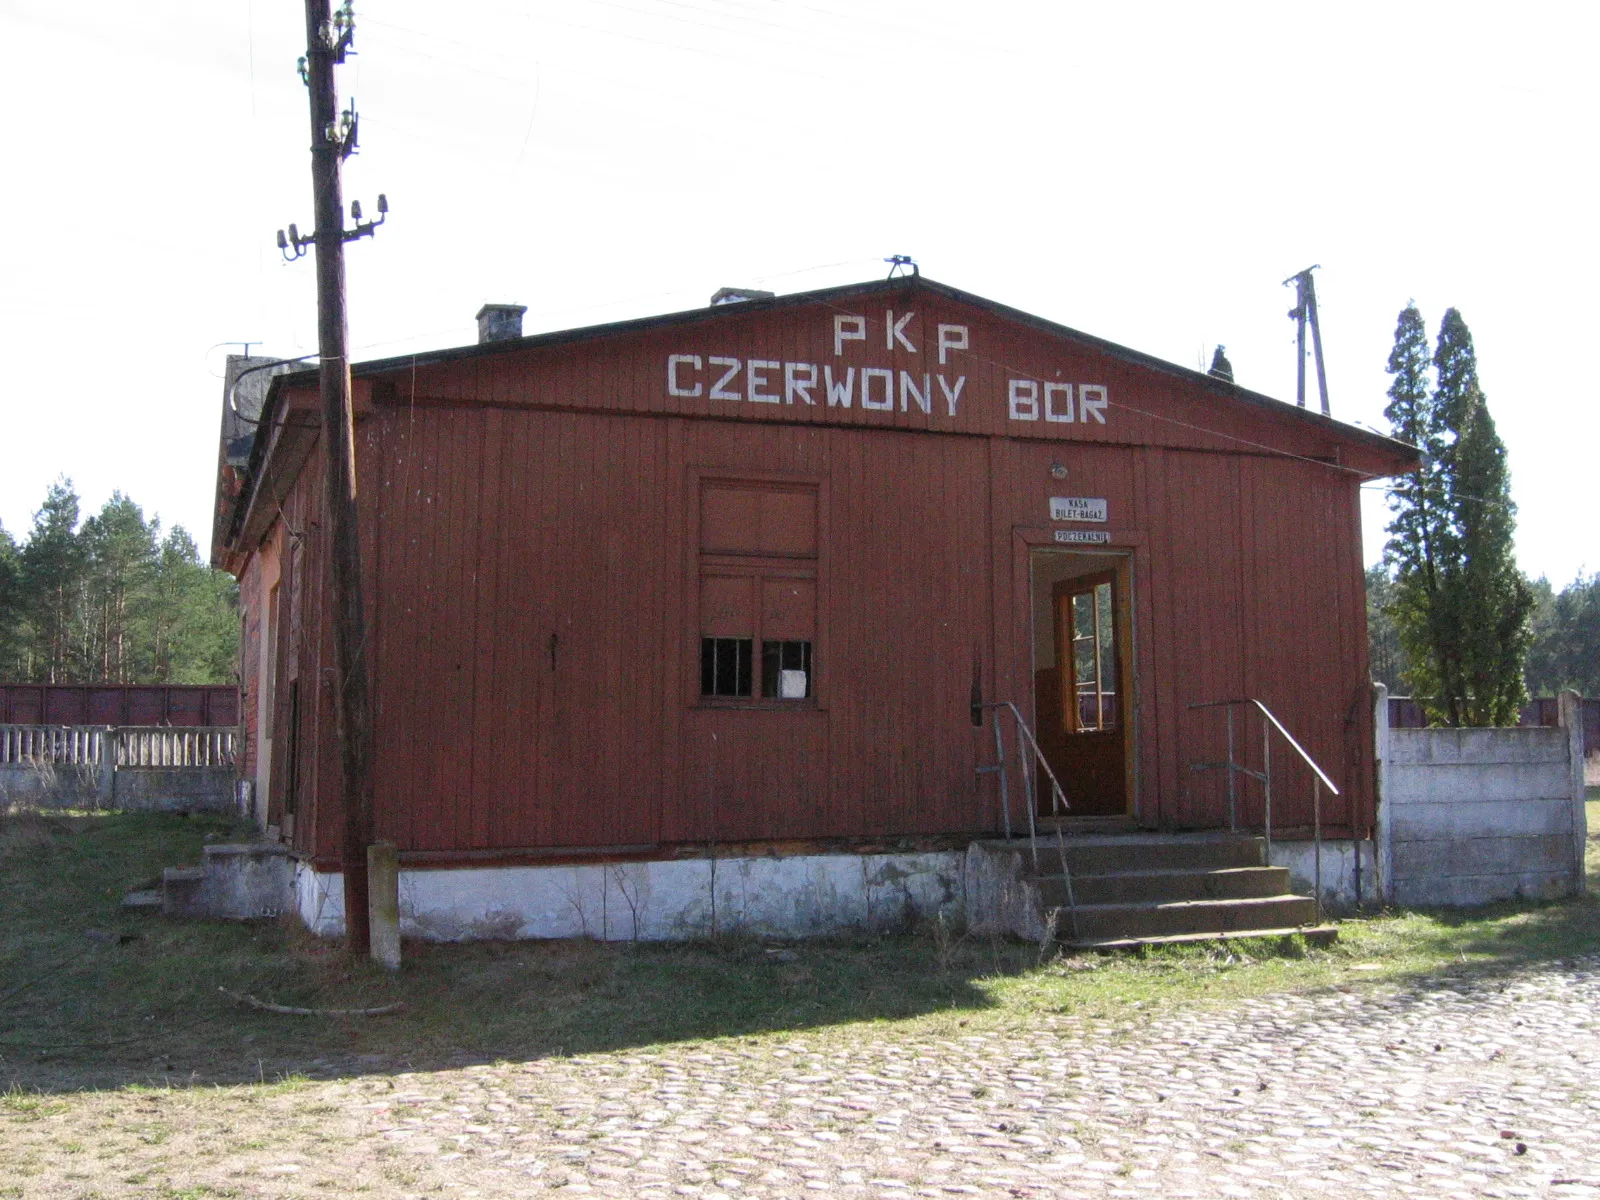 Photo showing: Abandoned railroad station "PKP Czerwony Bór", main building